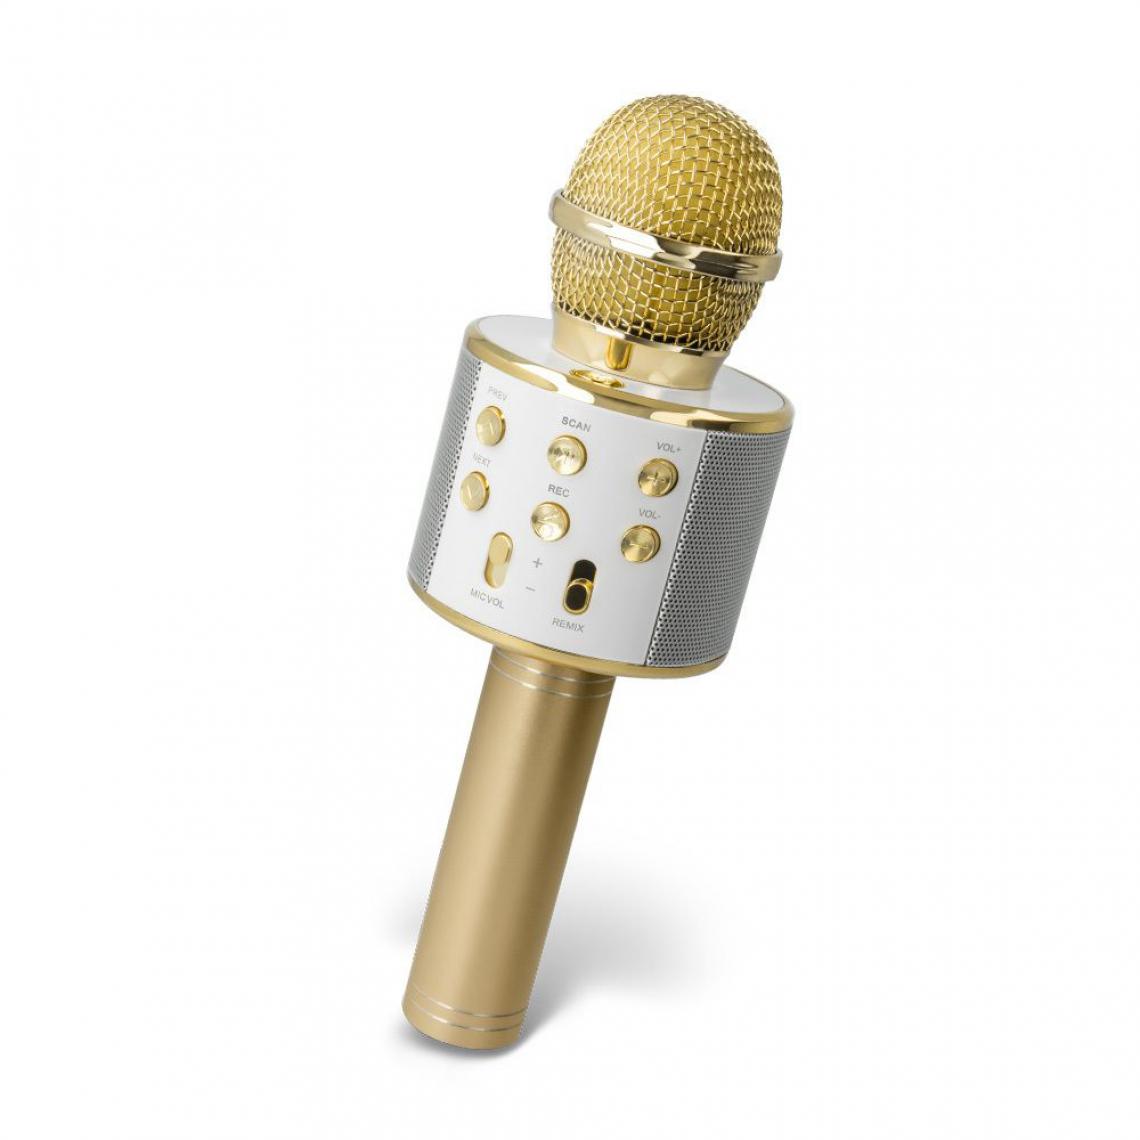 Ozzzo - Microphone Karaoke bluetooth haut parleur ozzzo Gold Or pour Samsung Galaxy Tab A 10.1 2019 - Autres accessoires smartphone